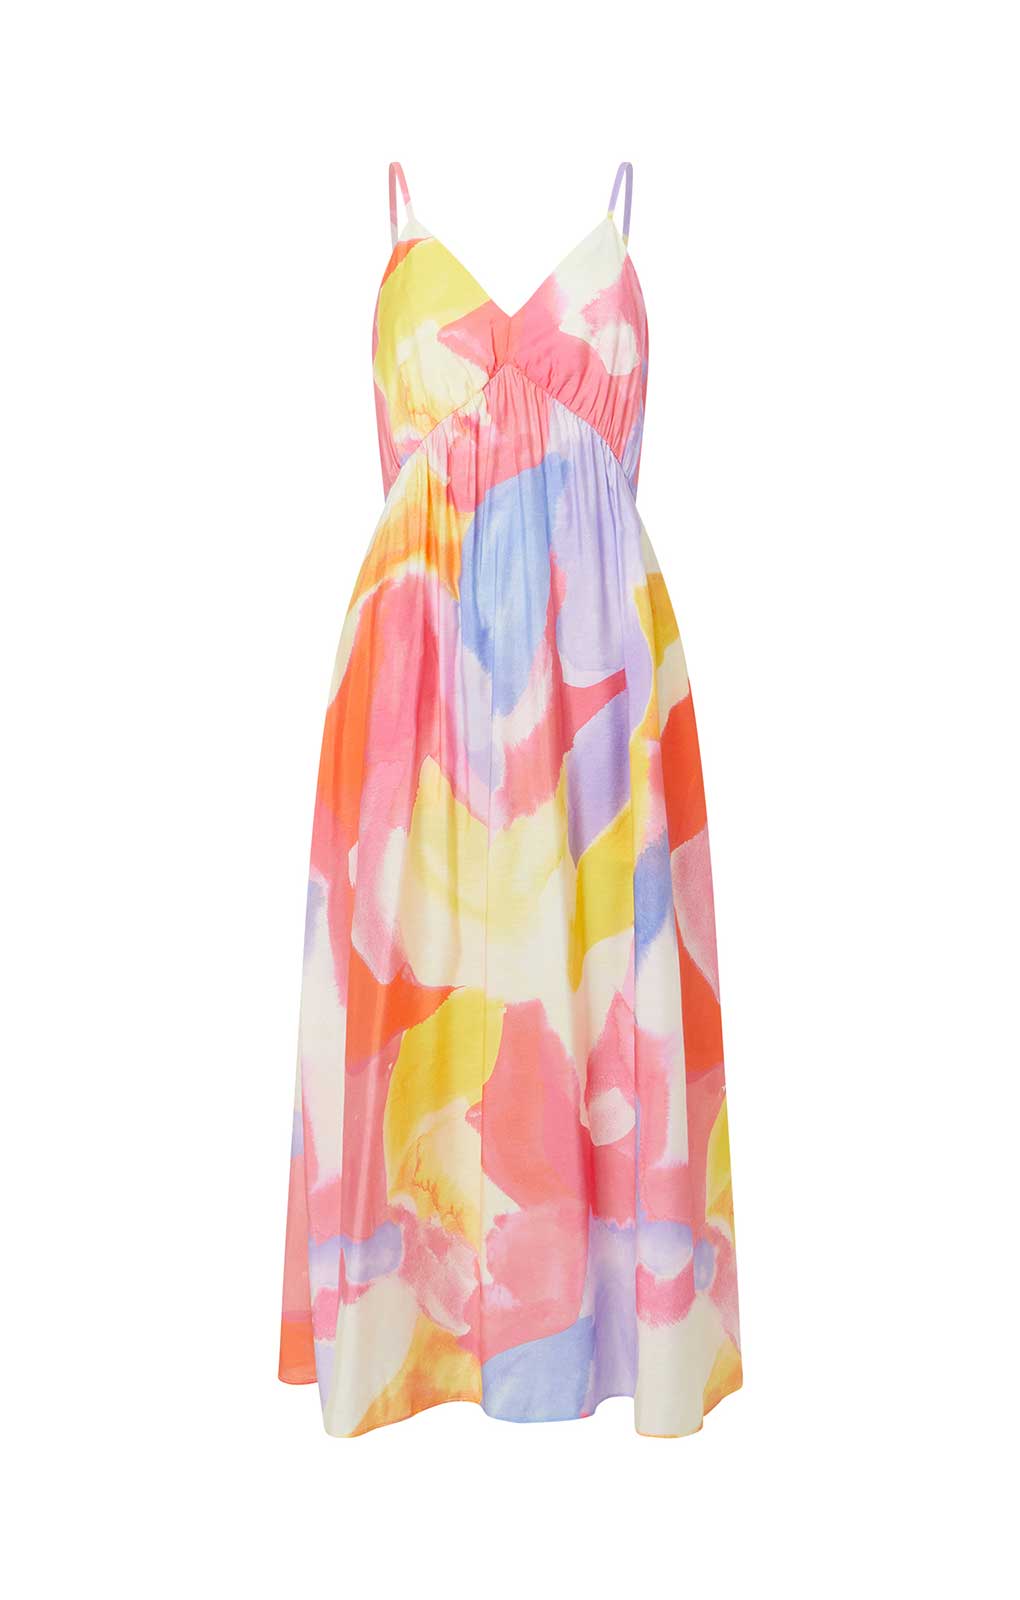 French Connection Isadora Faron Drape Sun Dress product image